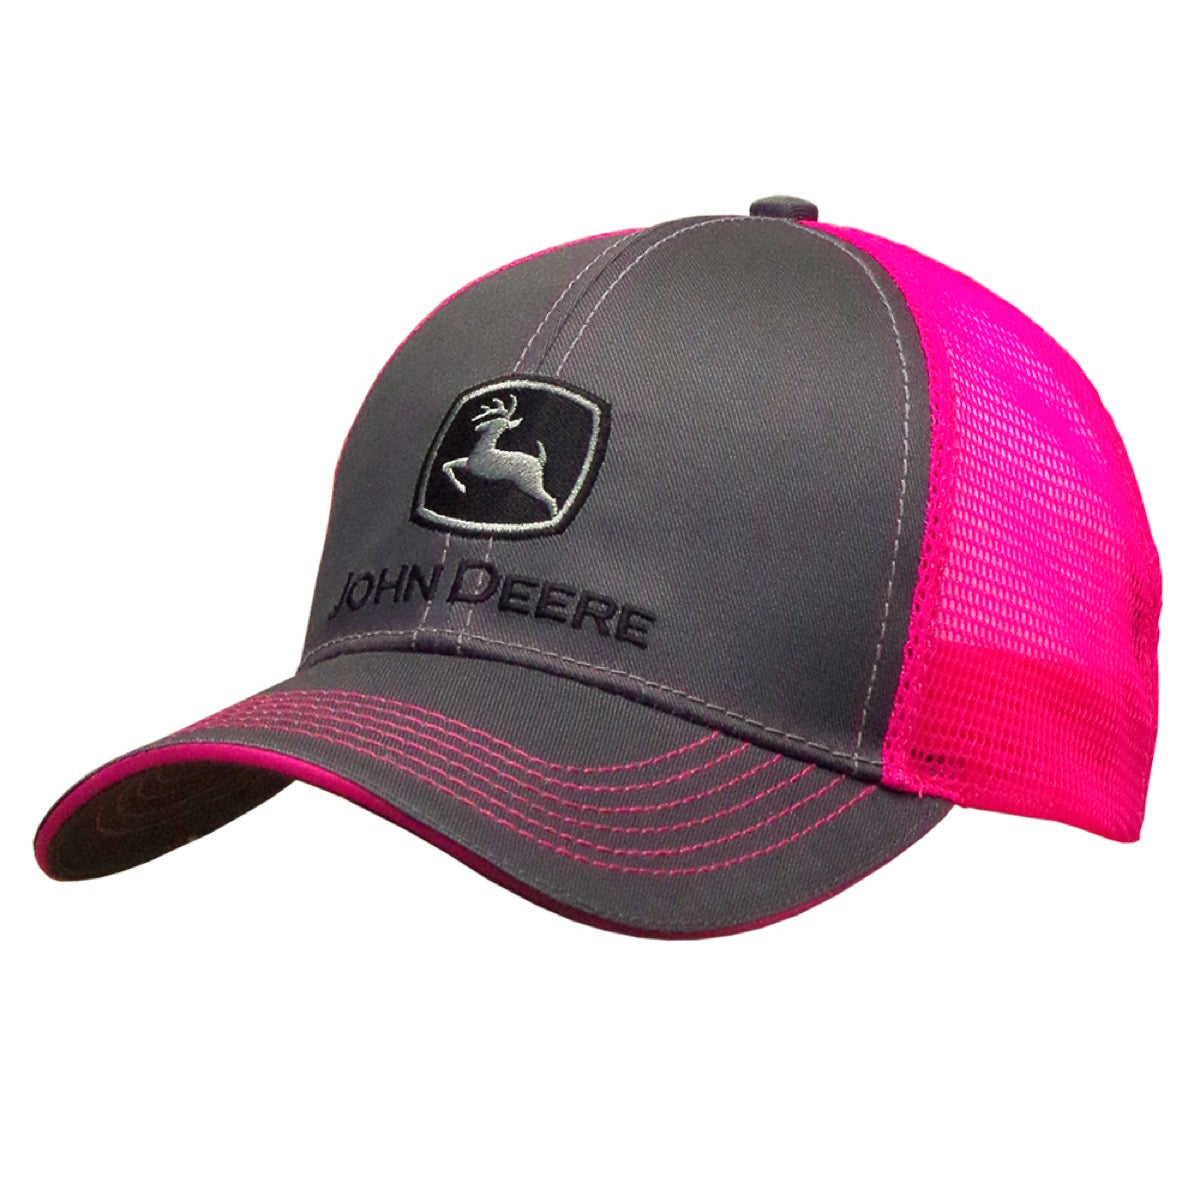 John Deere Charcoal and Neon Pink Logo Cap